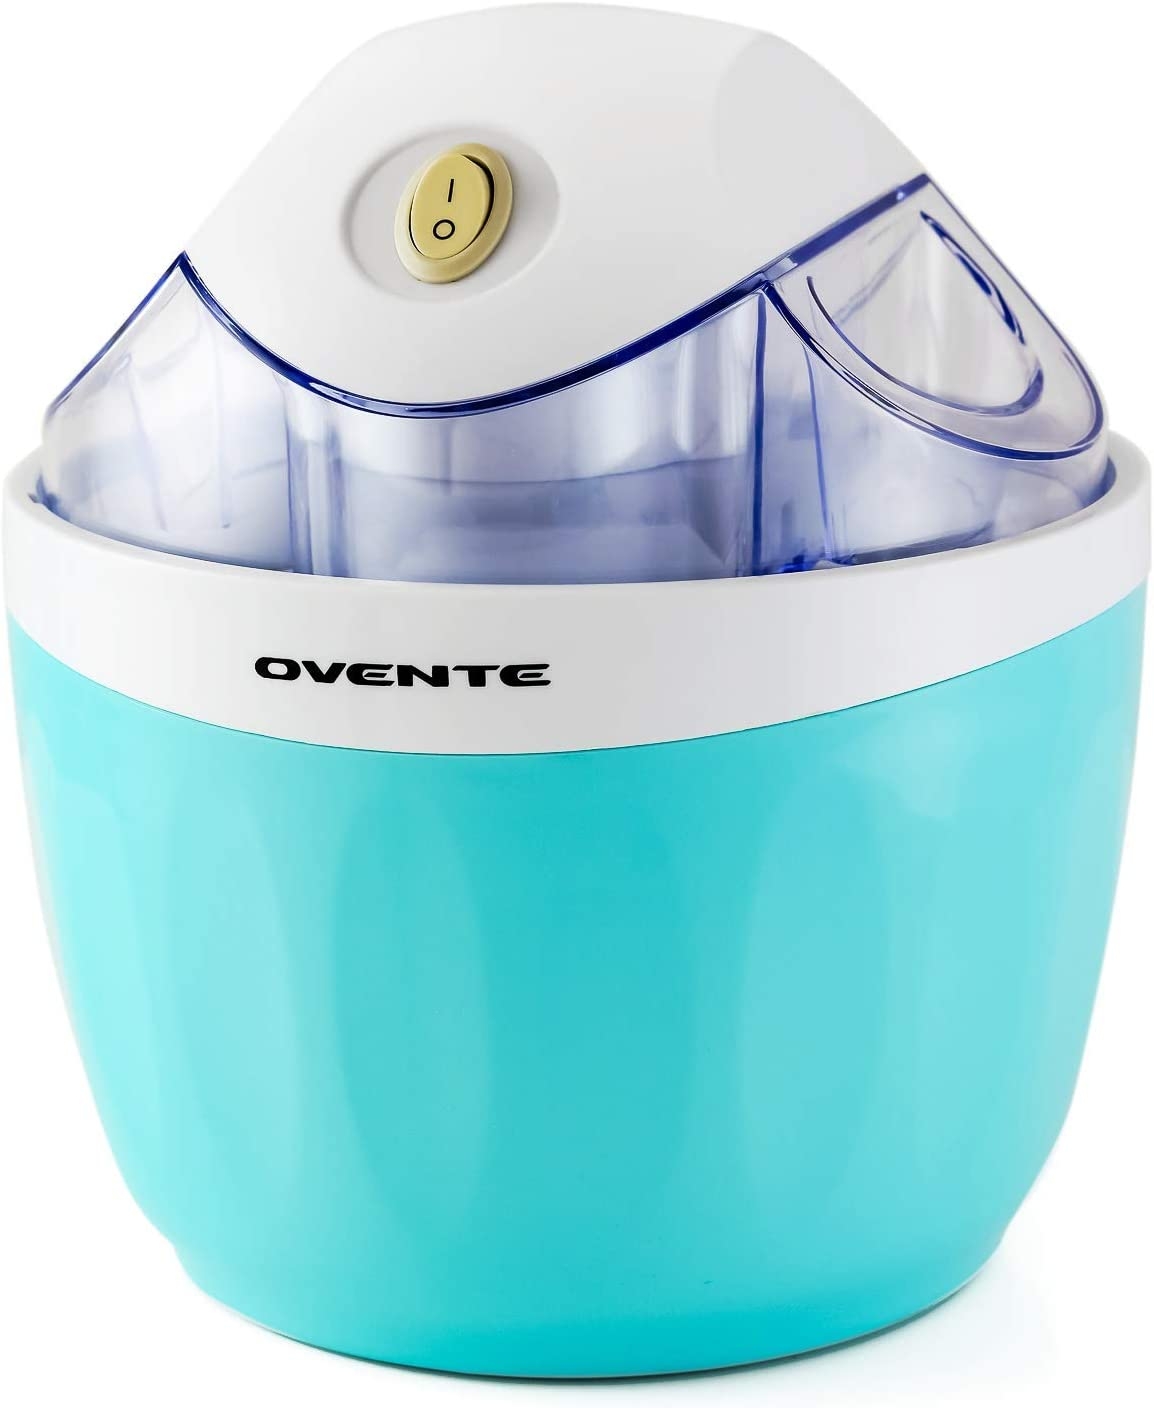 Ovente Electric Ice Cream Maker 1 Quart Freezer Bowl with Easy-Lock Lid, 15 Watt Healthy Homemade Sorbet Frozen Yogurt Making